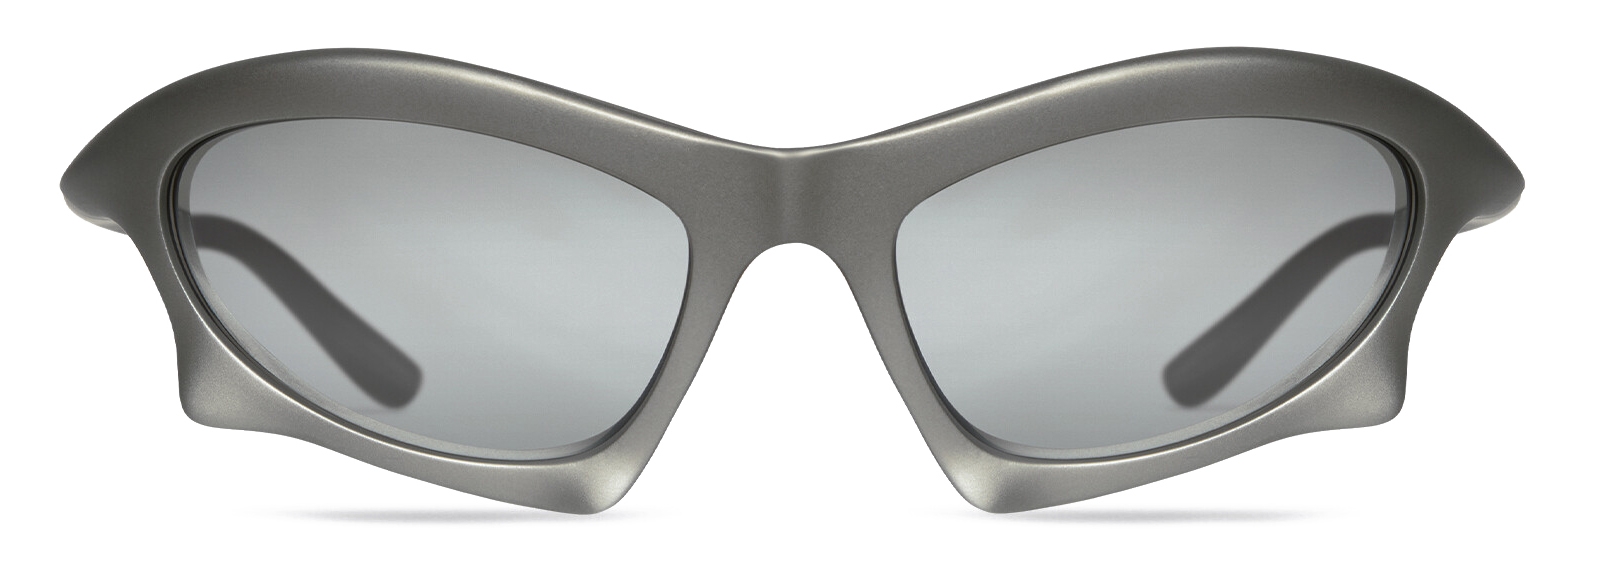 Balenciaga - Bat Rectangle Sunglasses - Silver - Sunglasses 